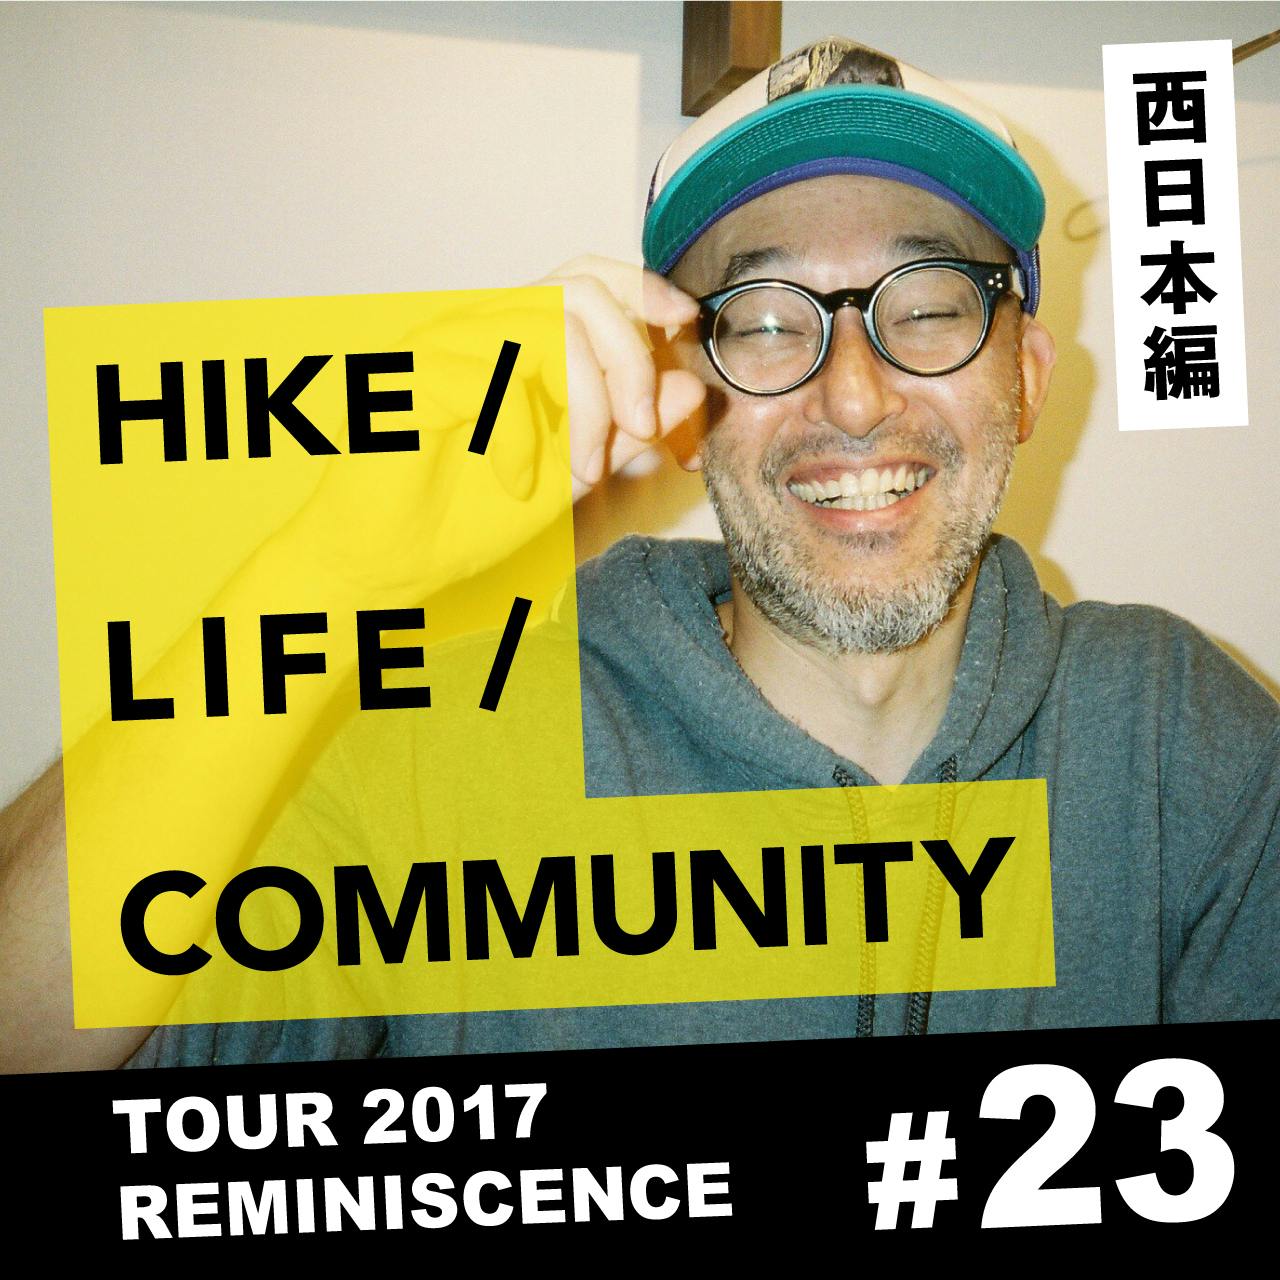 HIKE / LIFE / COMMUNITY TOUR 2017 REMINISCENCE #23 土屋智哉（ハイカーズデポ）